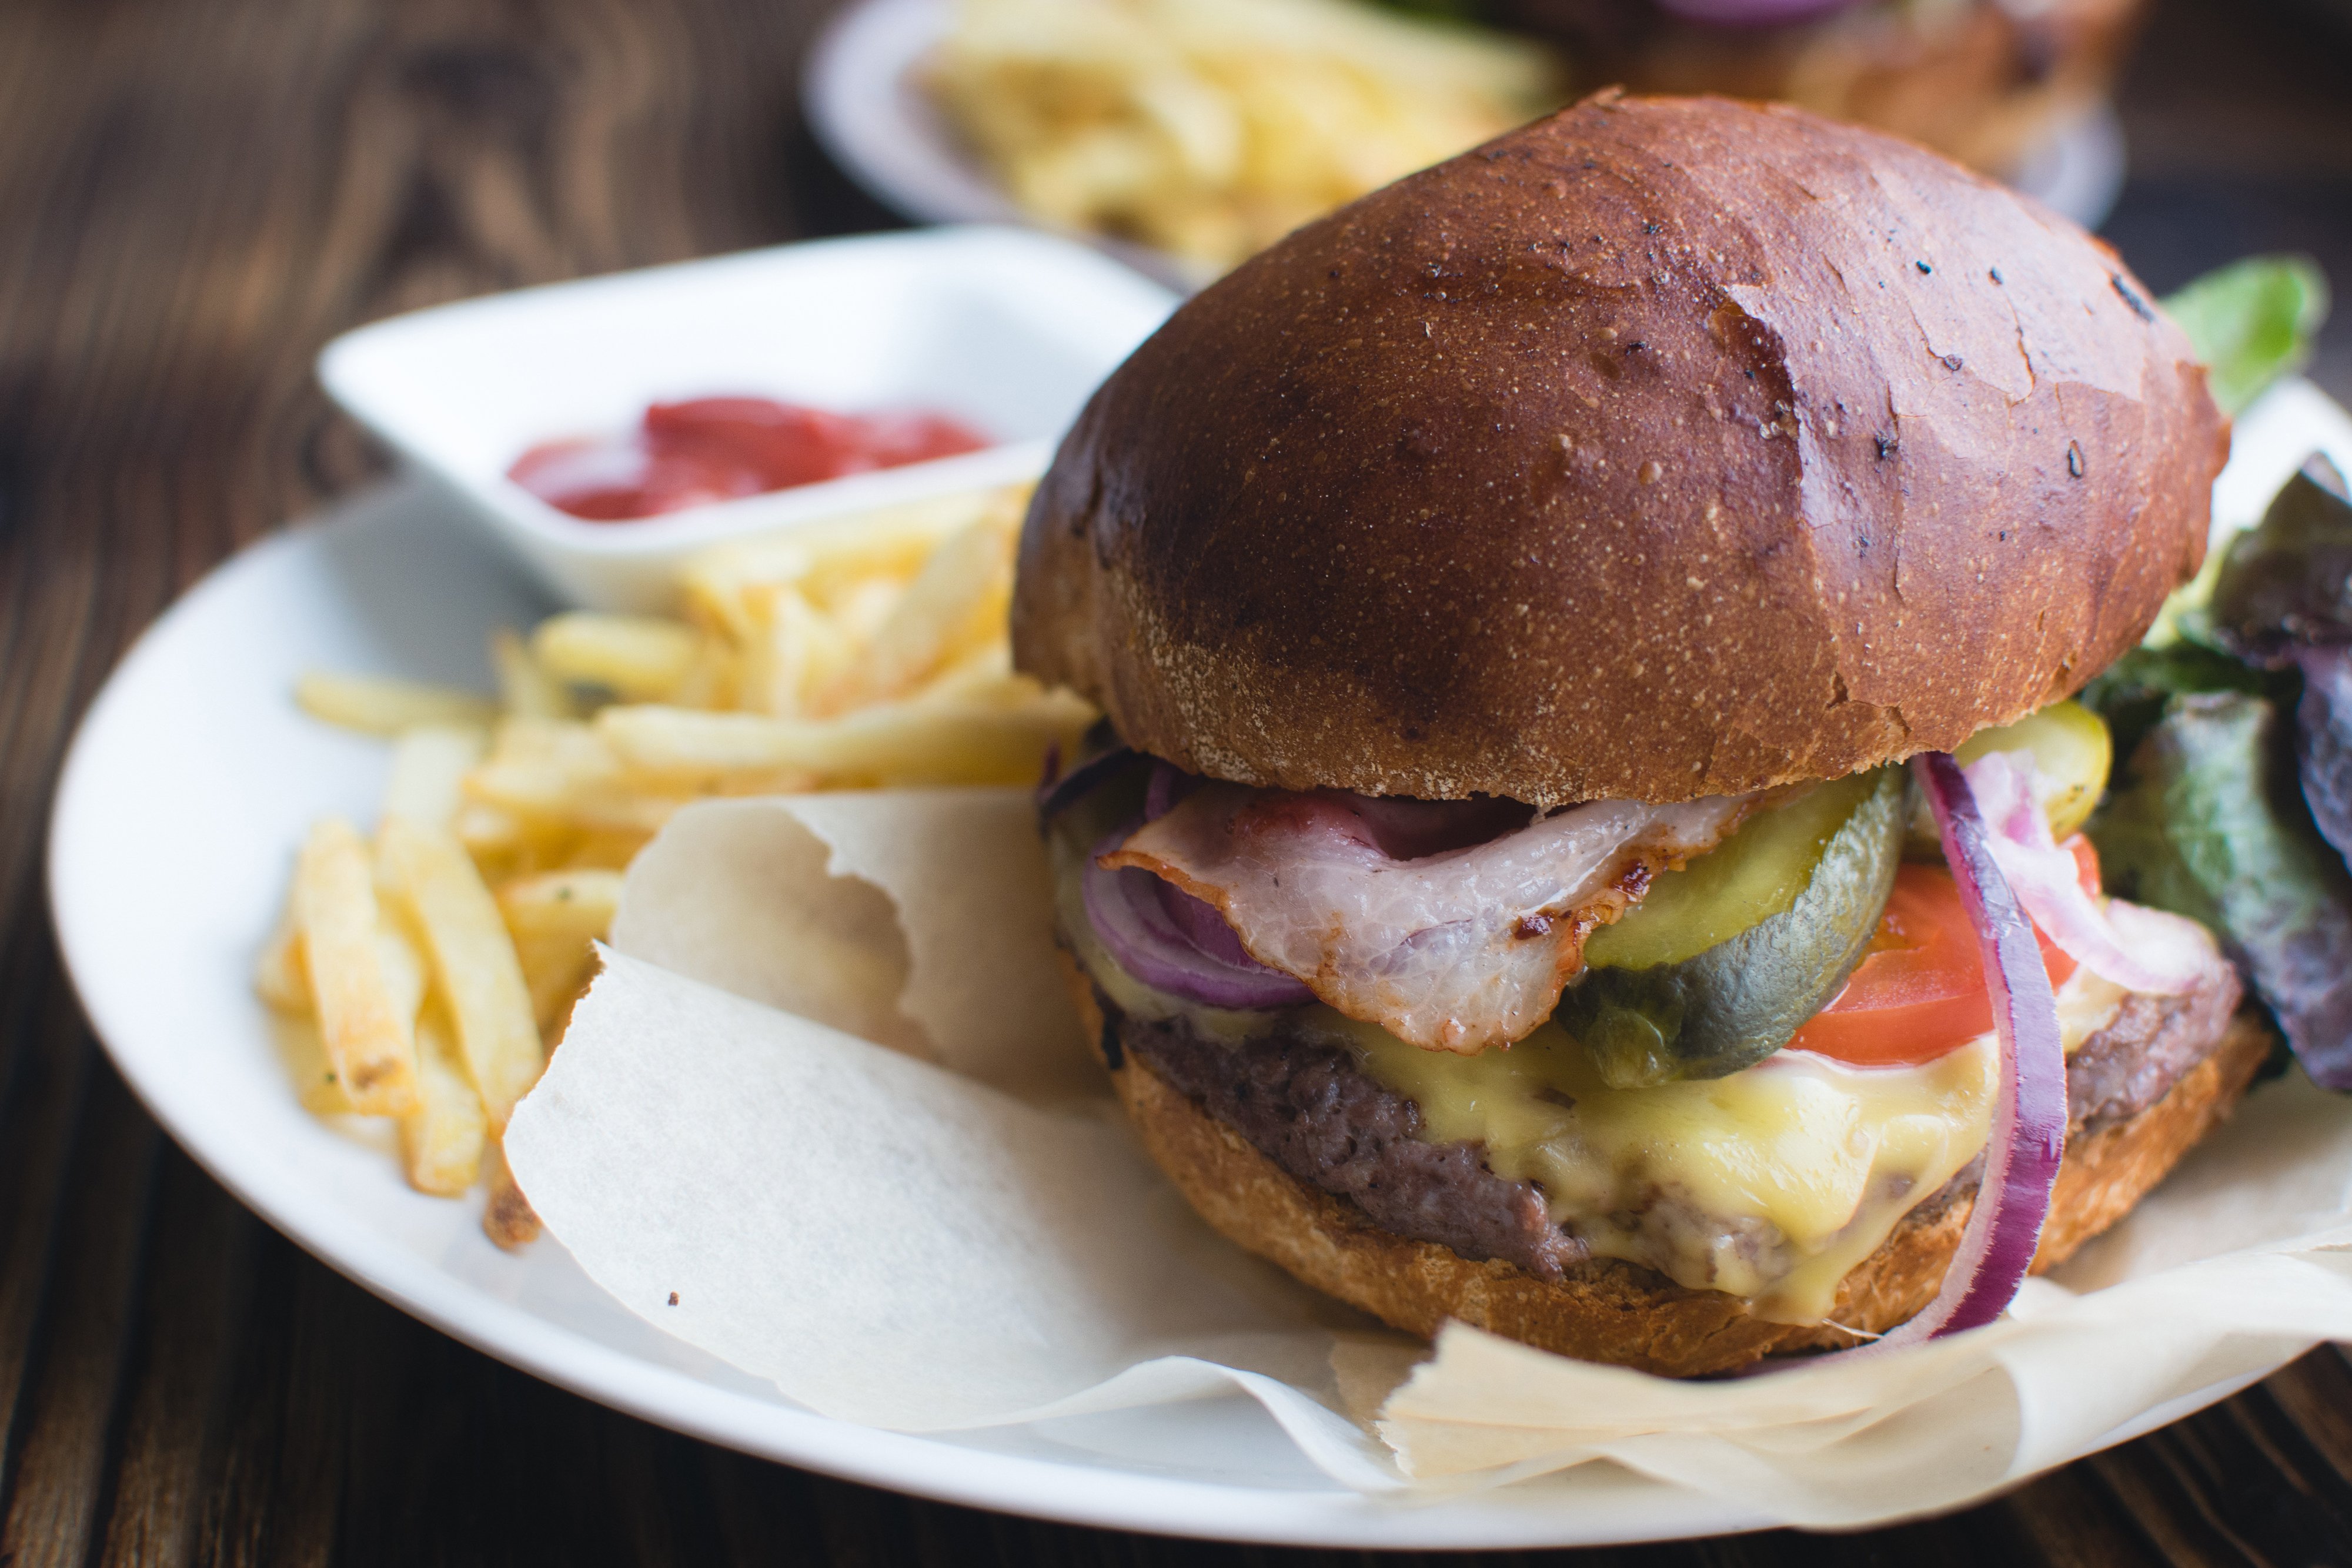 a juicy burger image via PicJumbo